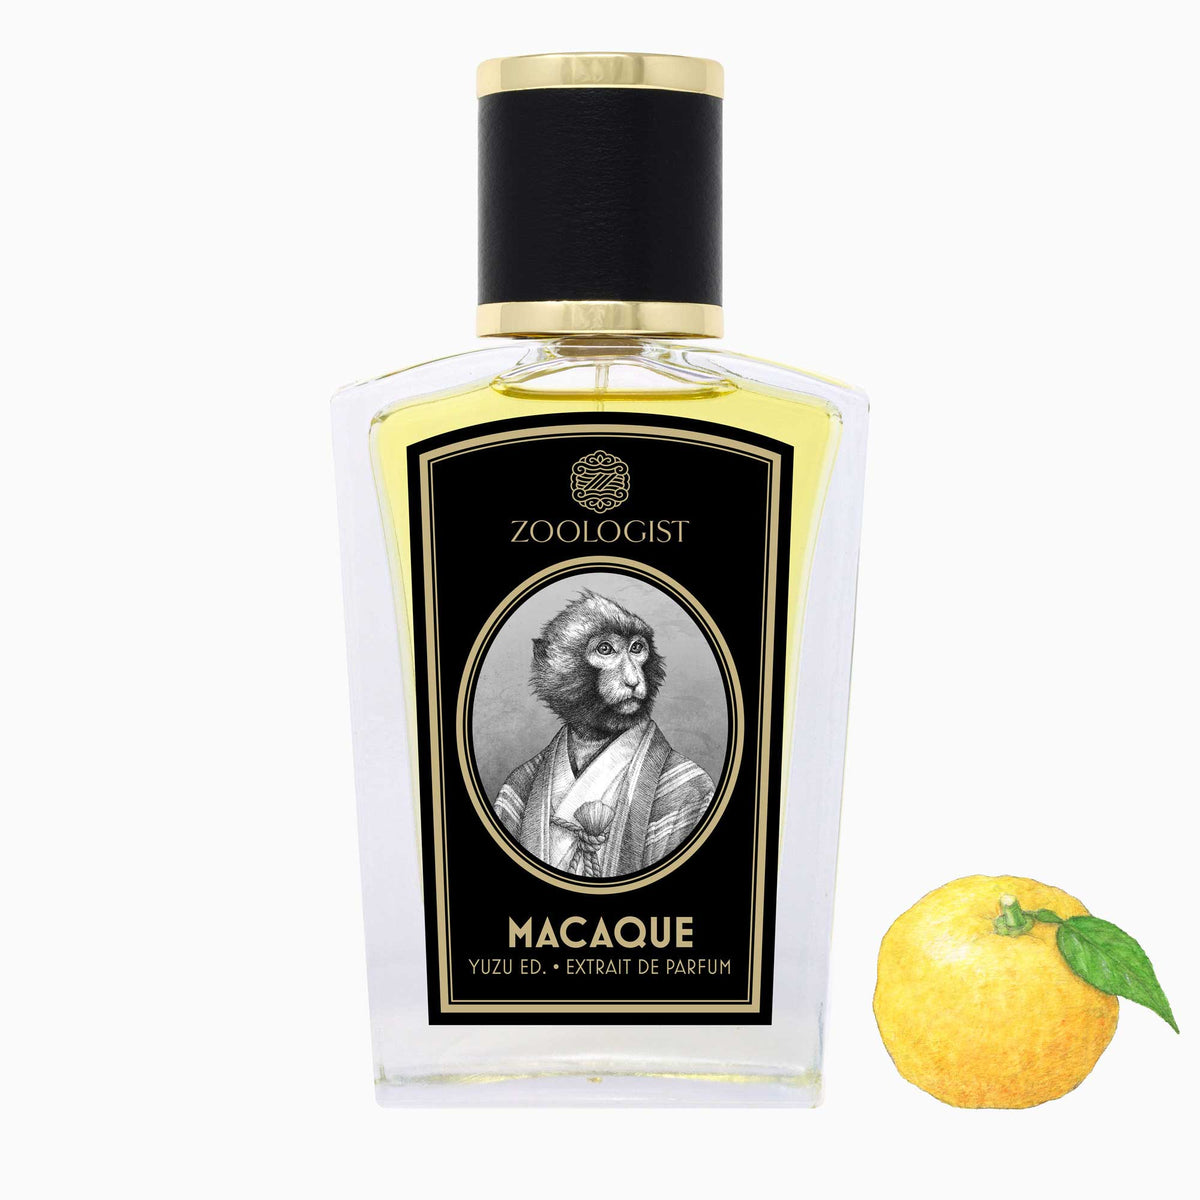 zoologist macaque yuzu edition ekstrakt perfum 0.5 ml   